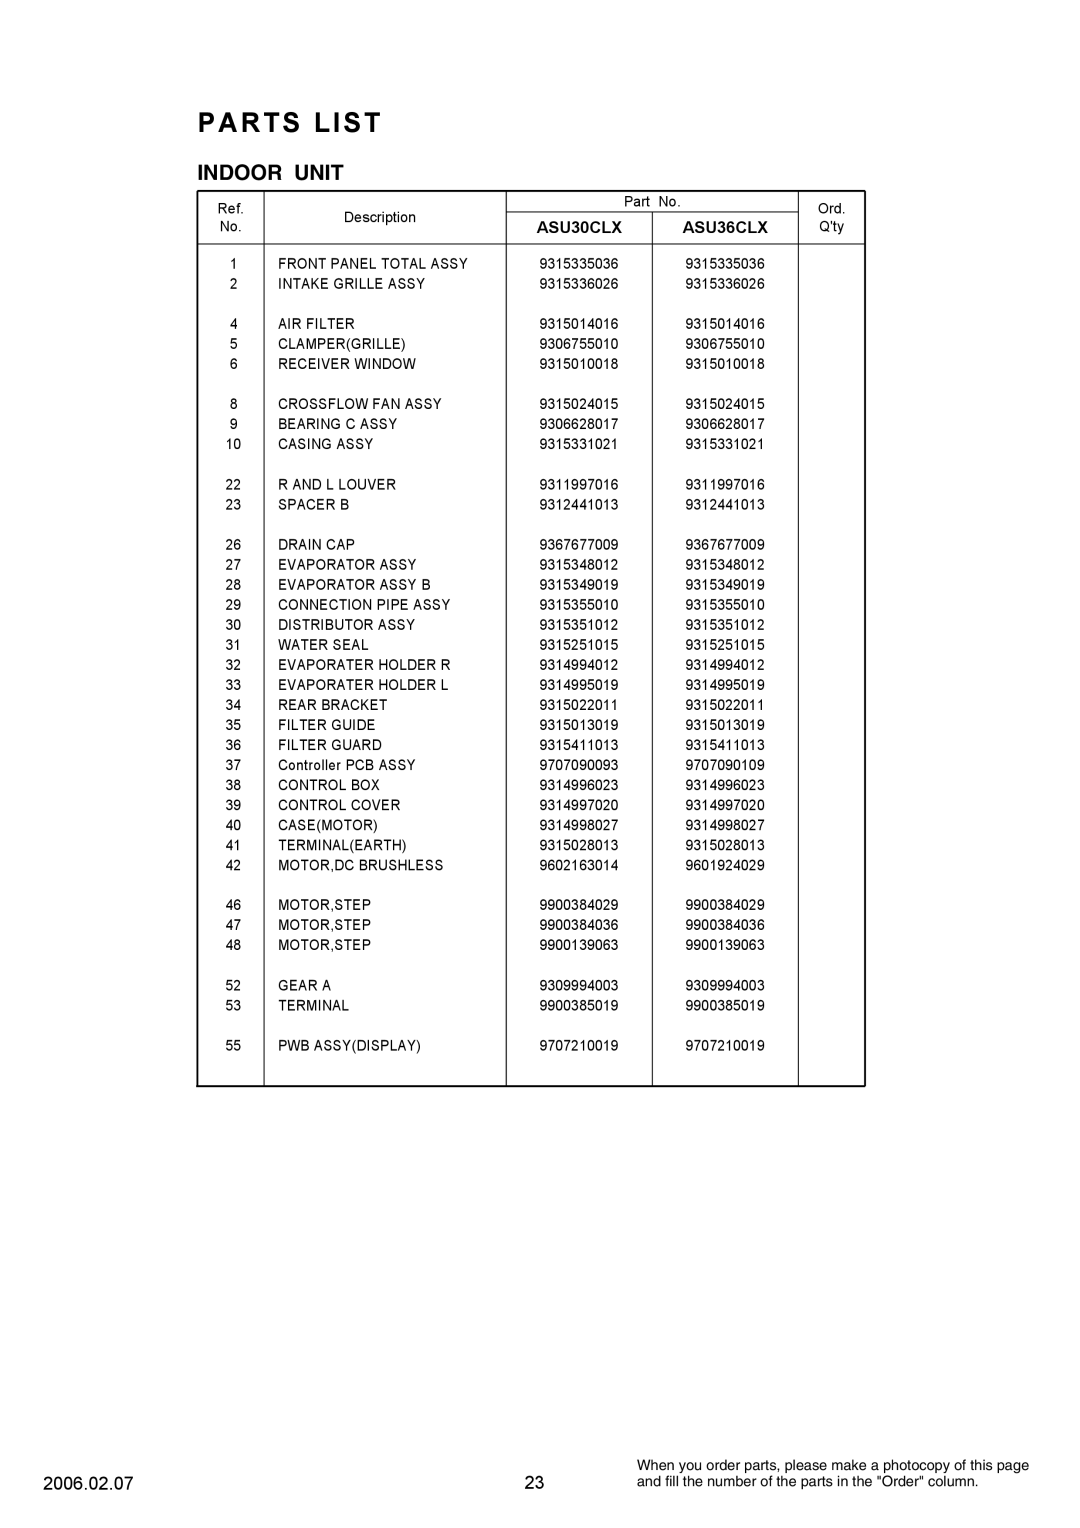 Fujitsu ASU36CLX, AOU36CLX, AOU30CLX specifications Parts List, Indoor Unit, ASU30CLX 